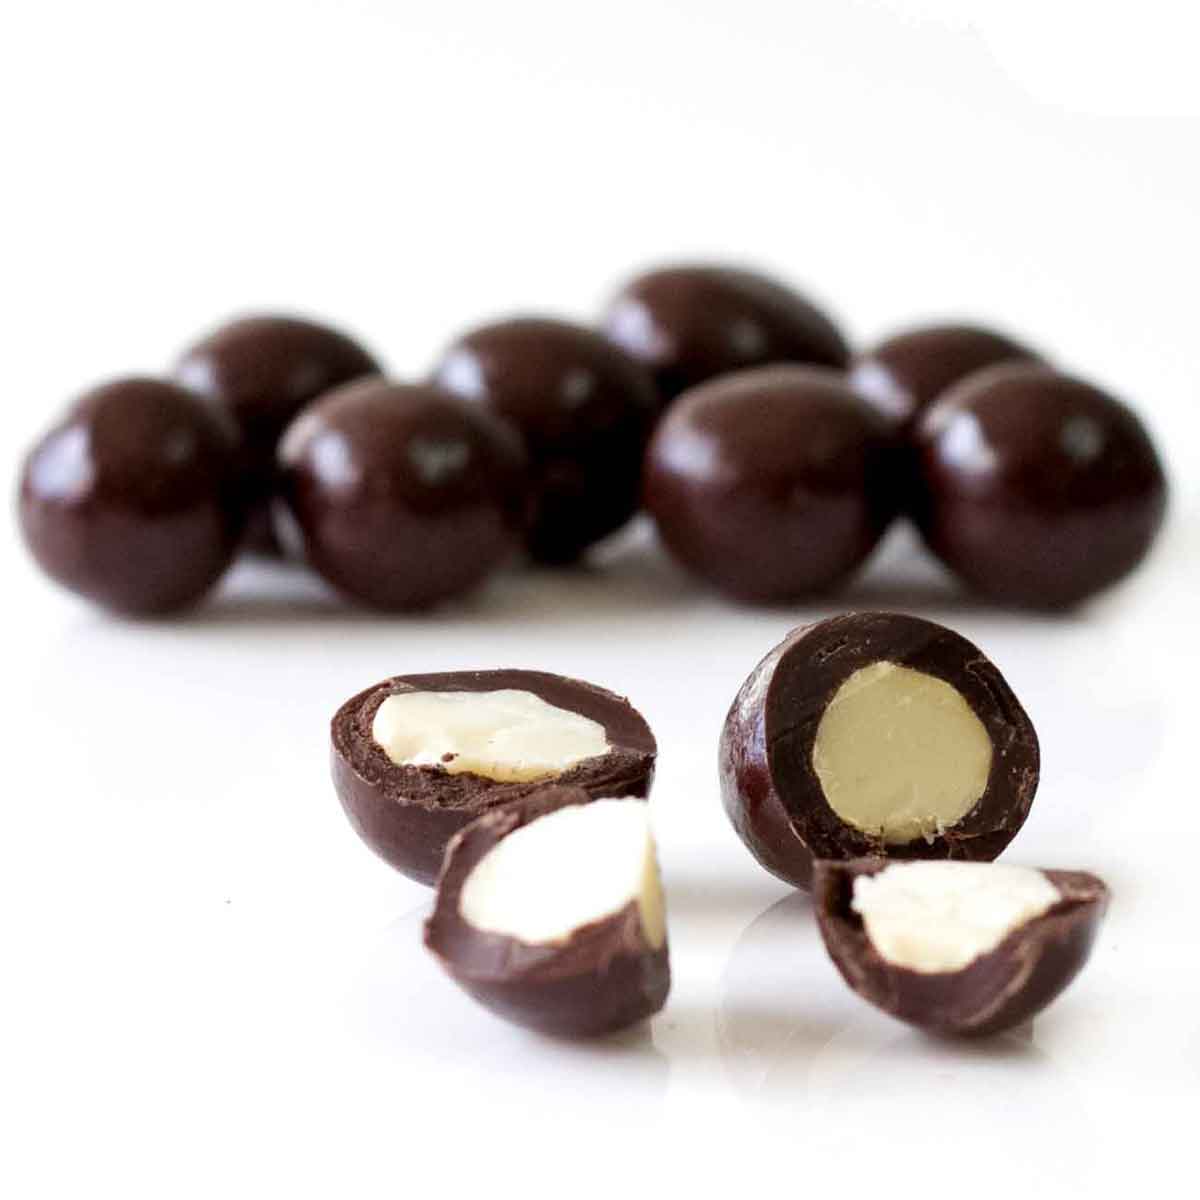 Organic Times Dark Chocolate Macadamias 150g-The Living Co.